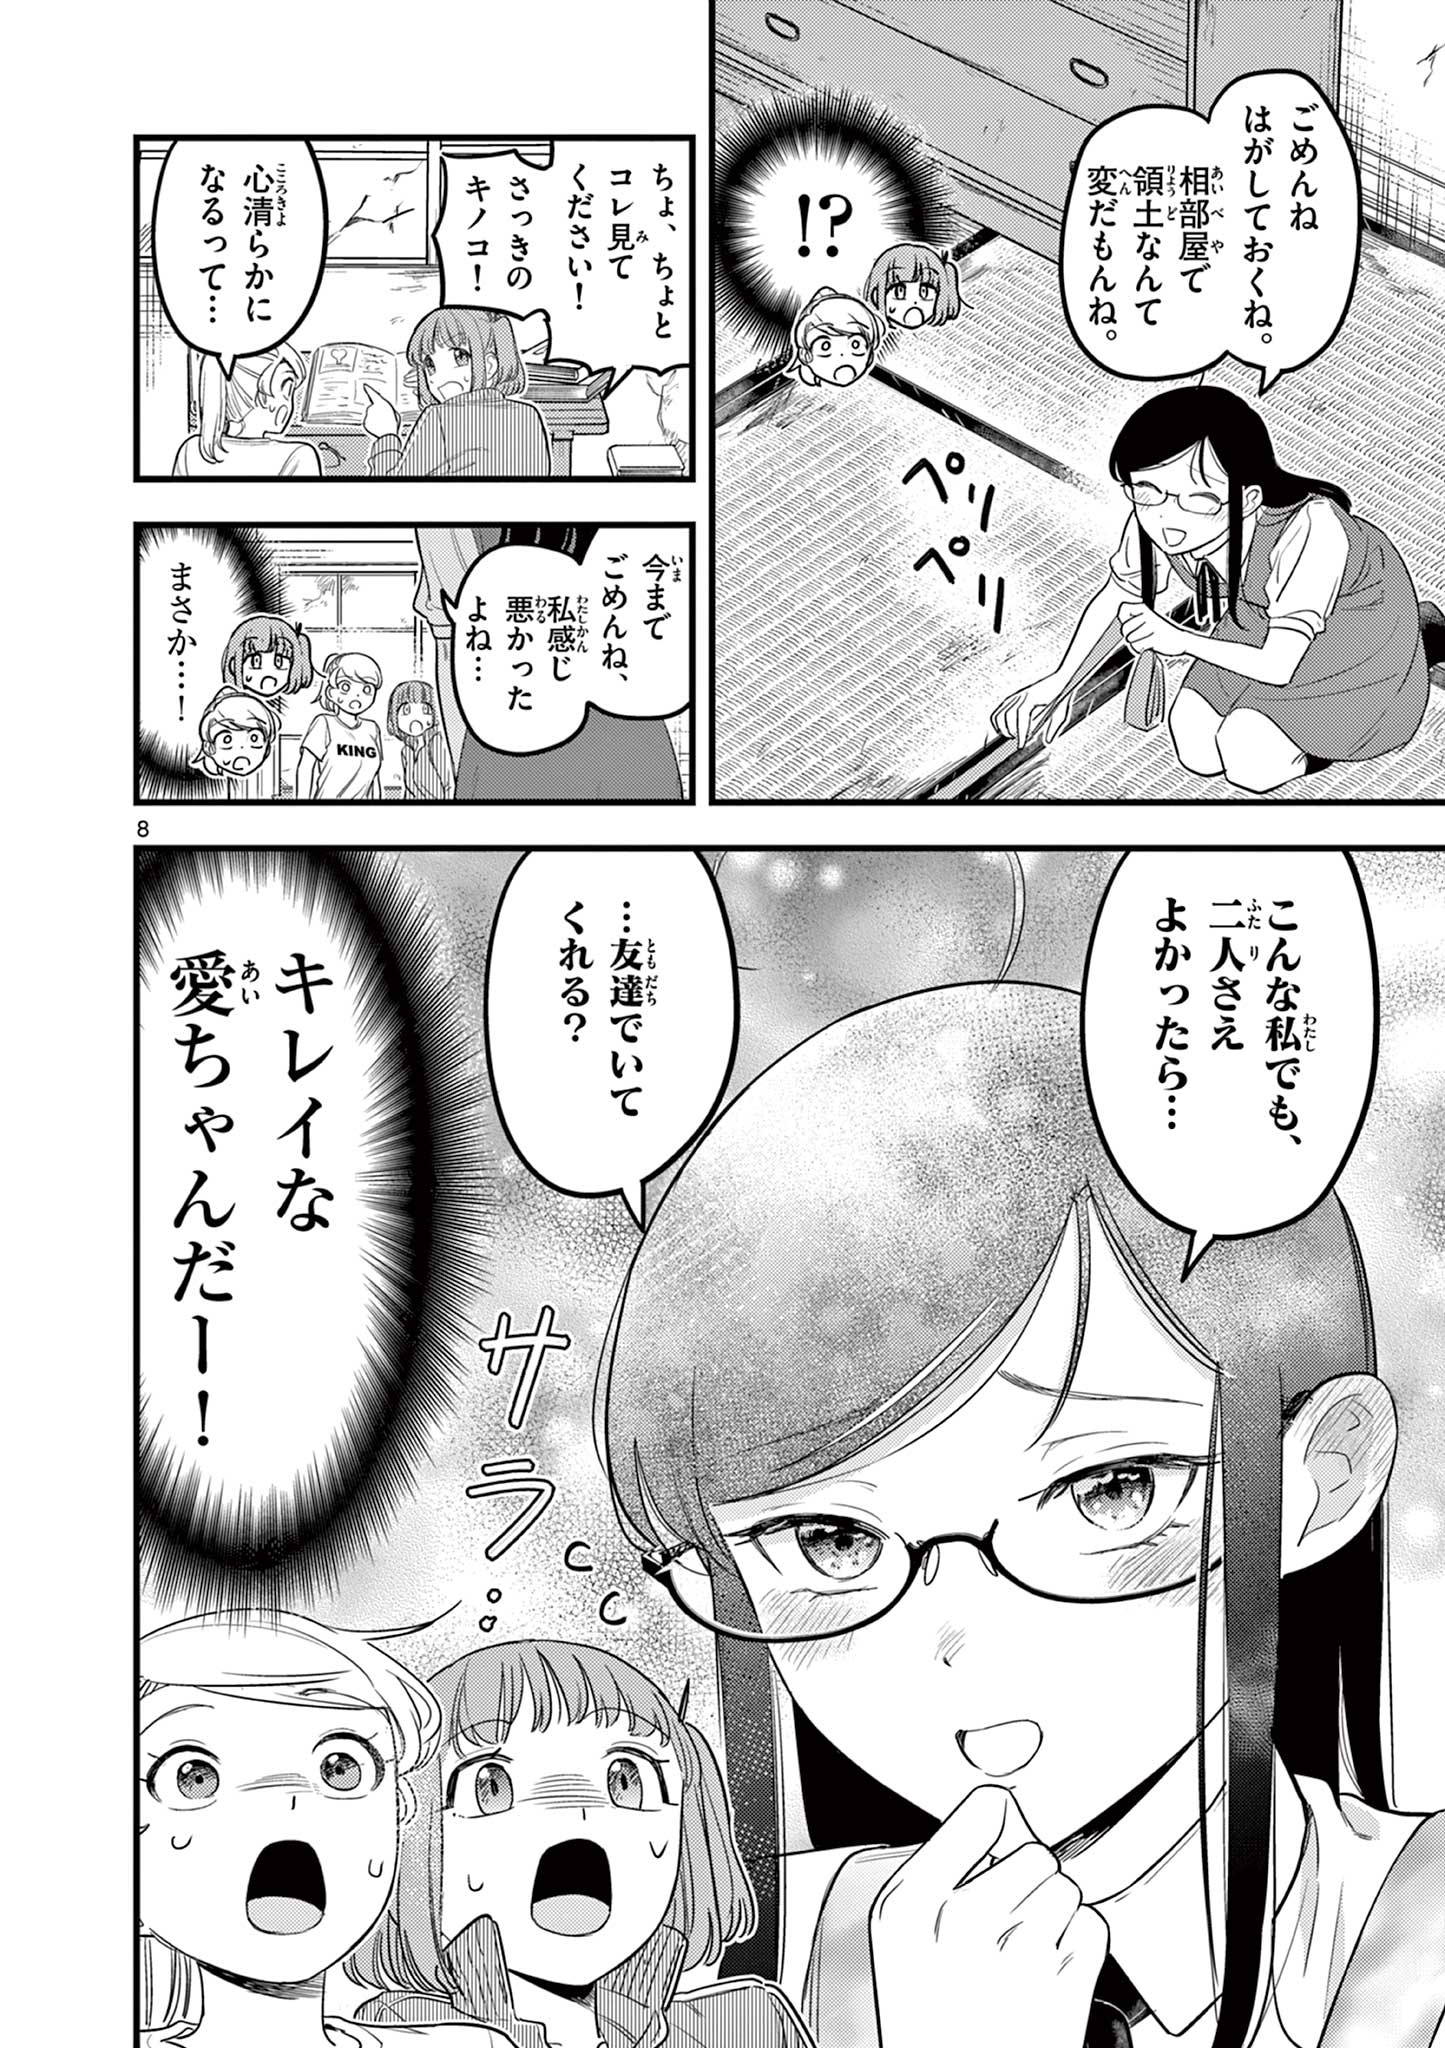 Kuro Mahou Ryou no Sanakunin - Chapter 13 - Page 8